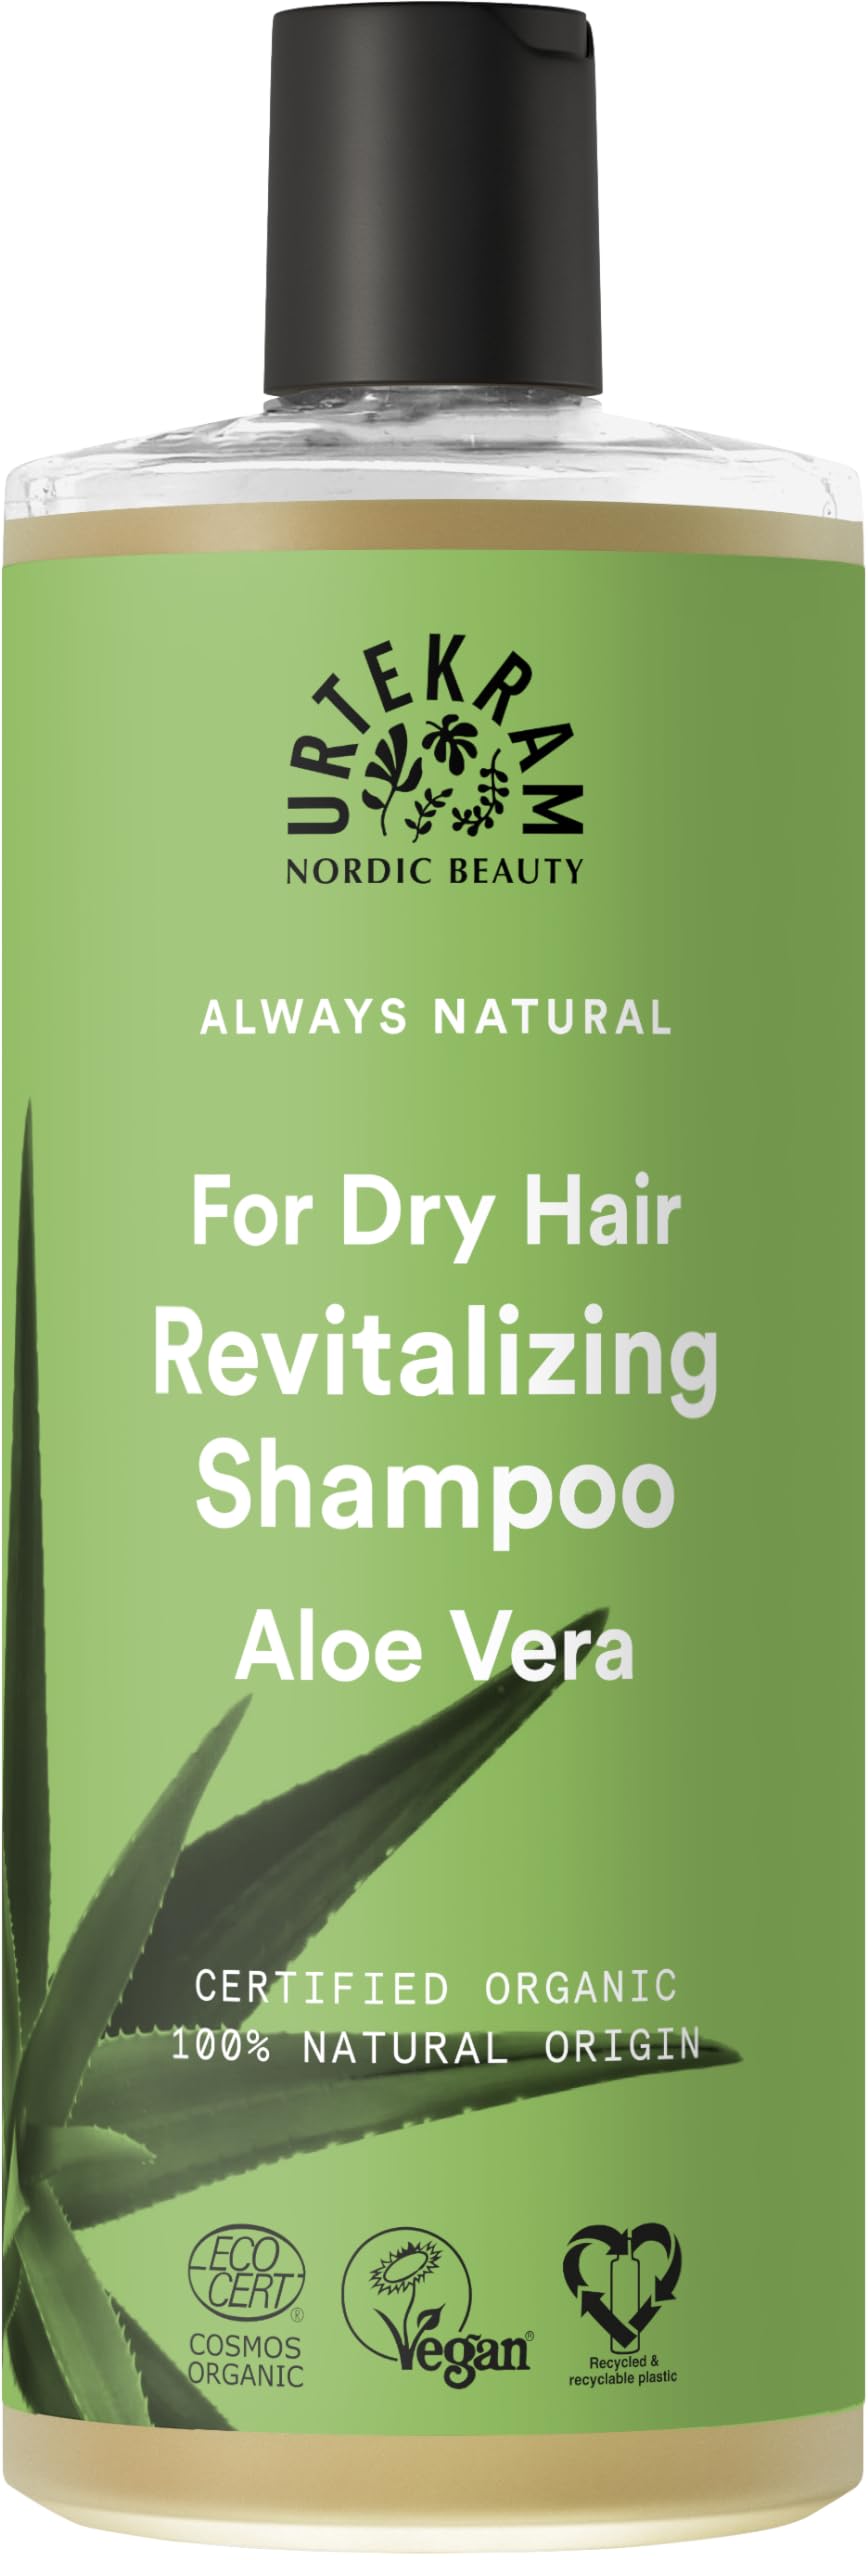 Urtekram Aloe Vera Shampoo für trockenes Haar BIO, 500 ml (6 x 500 ml)